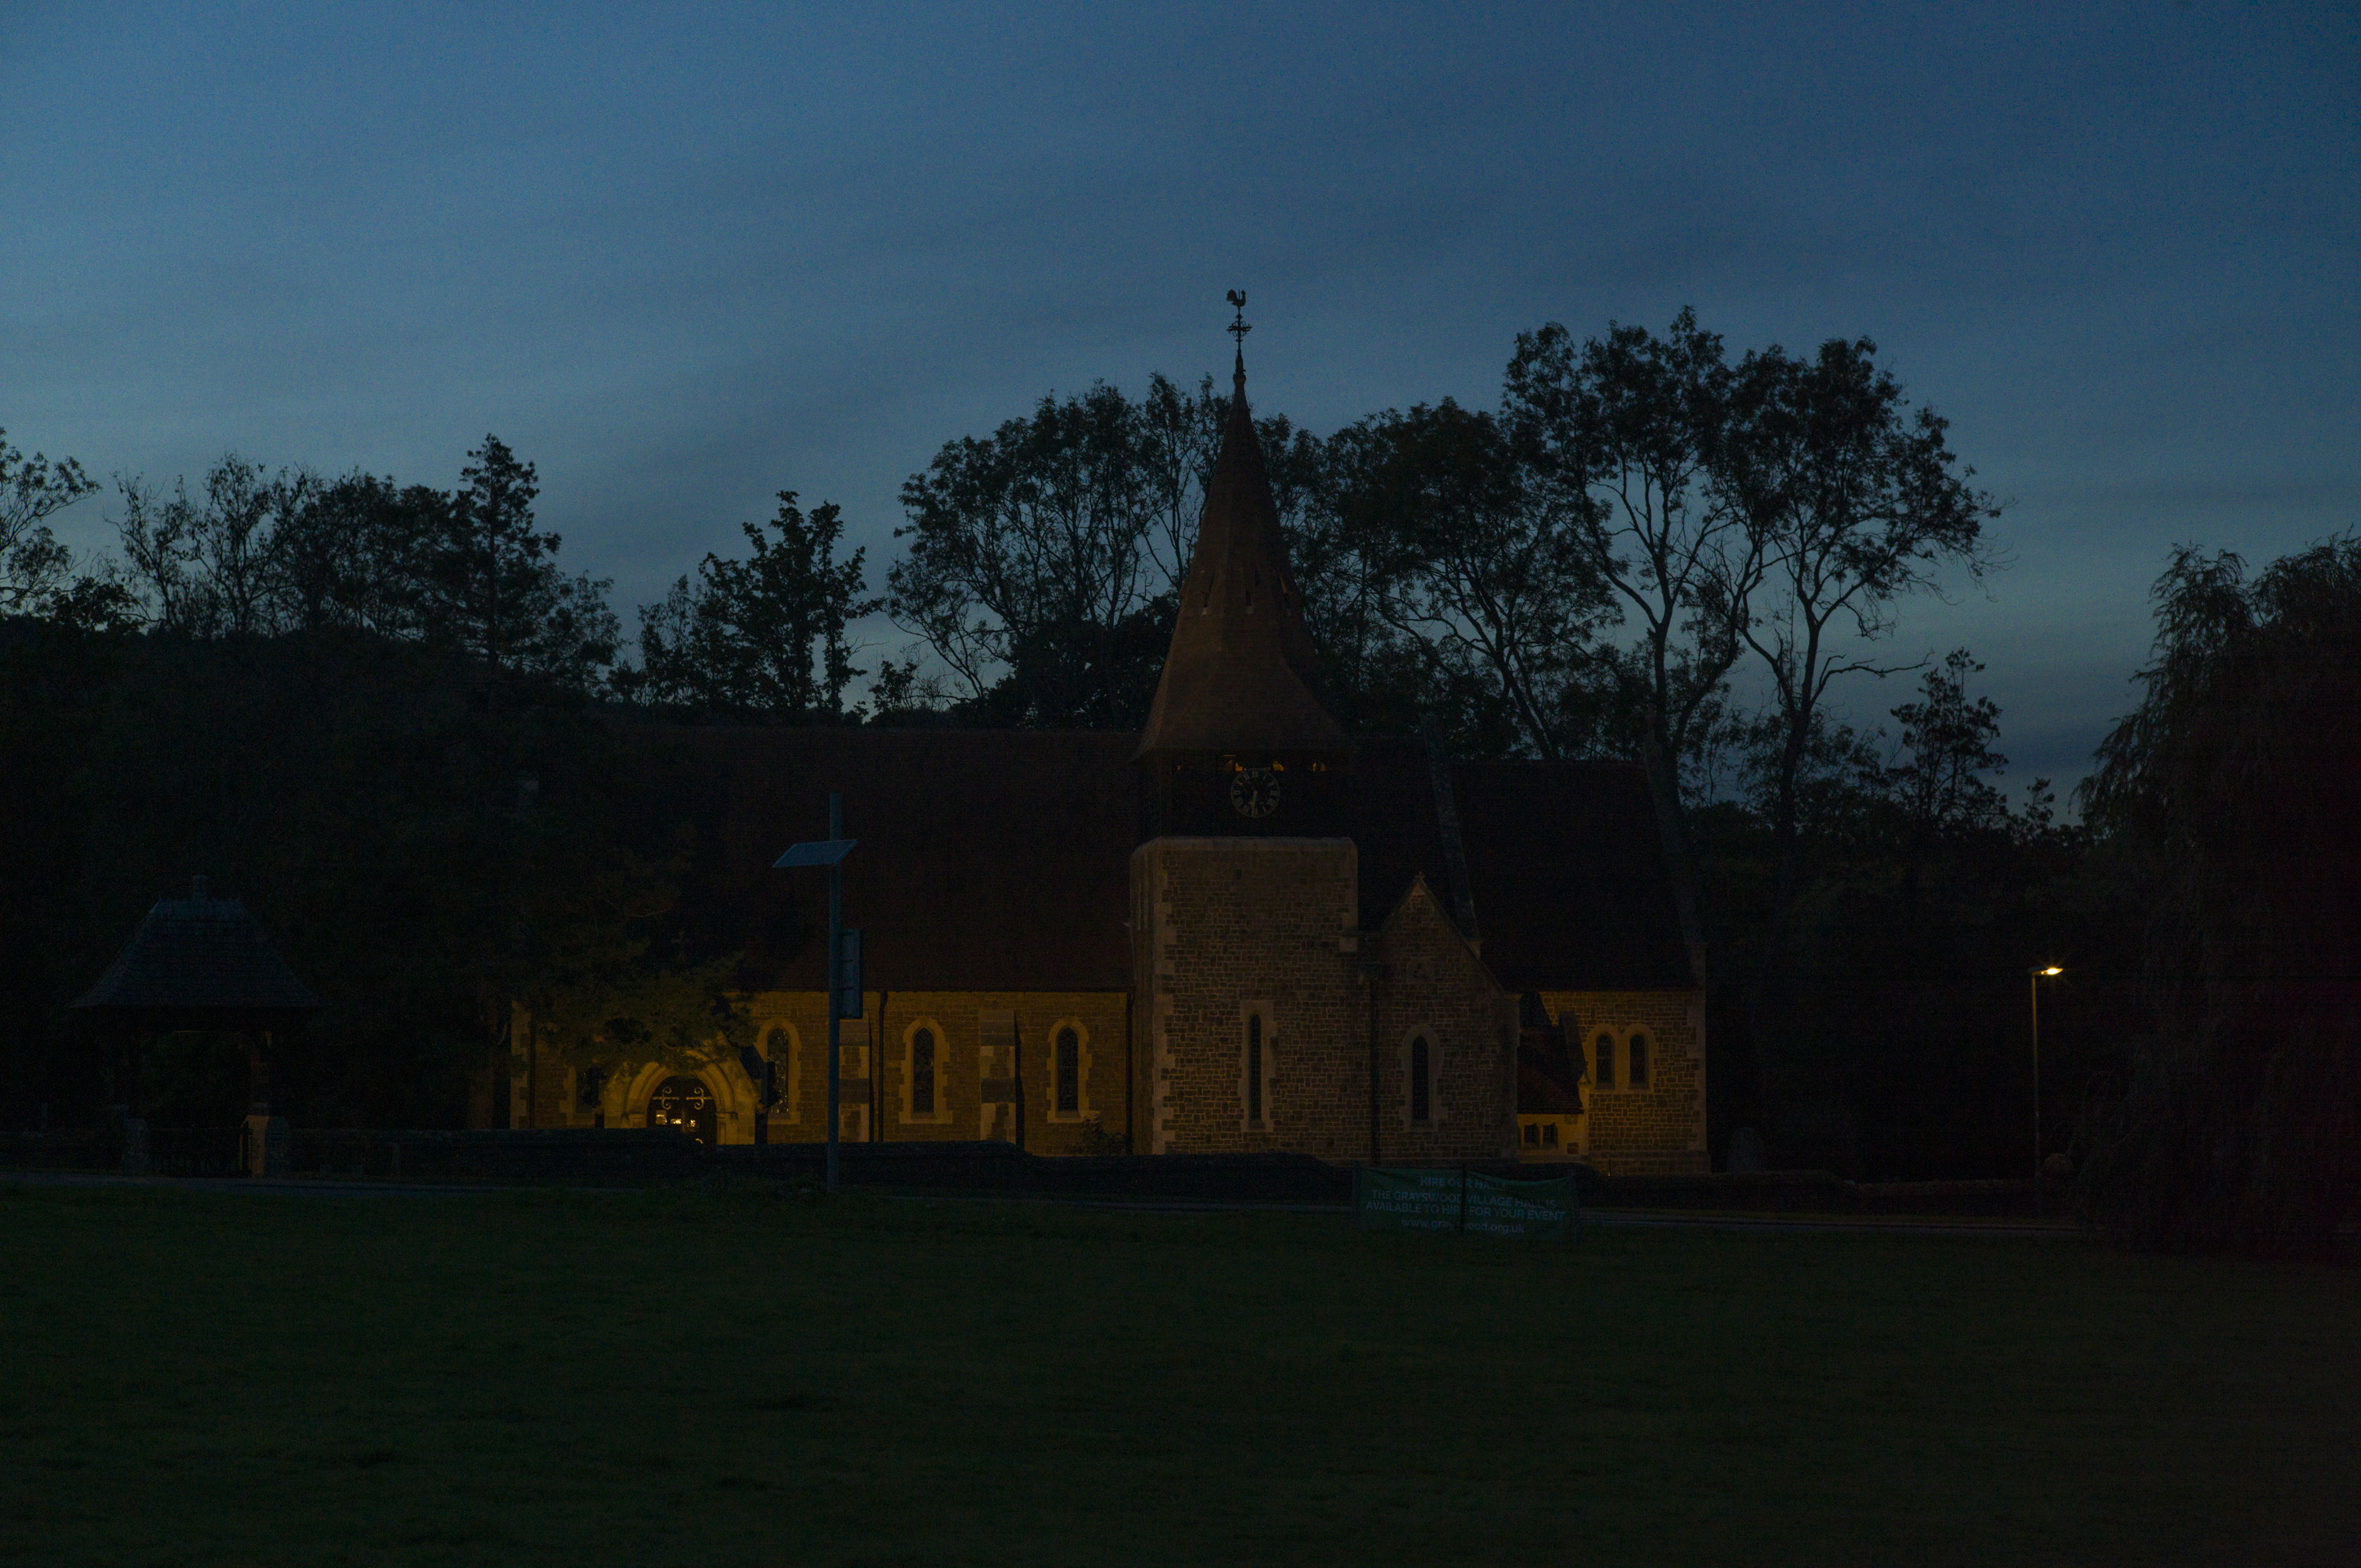 Night photo of an illuminated church taken with Leica M11-P